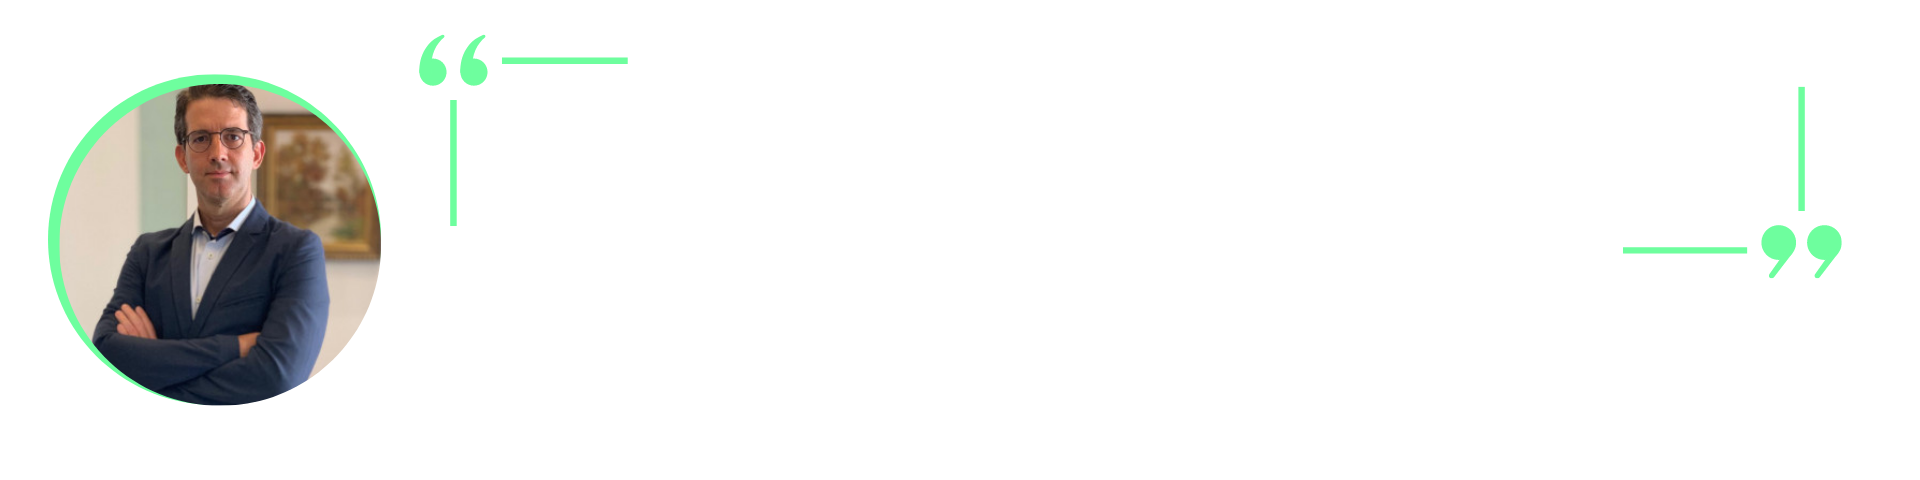 Doctor Montalverne's quotation : 